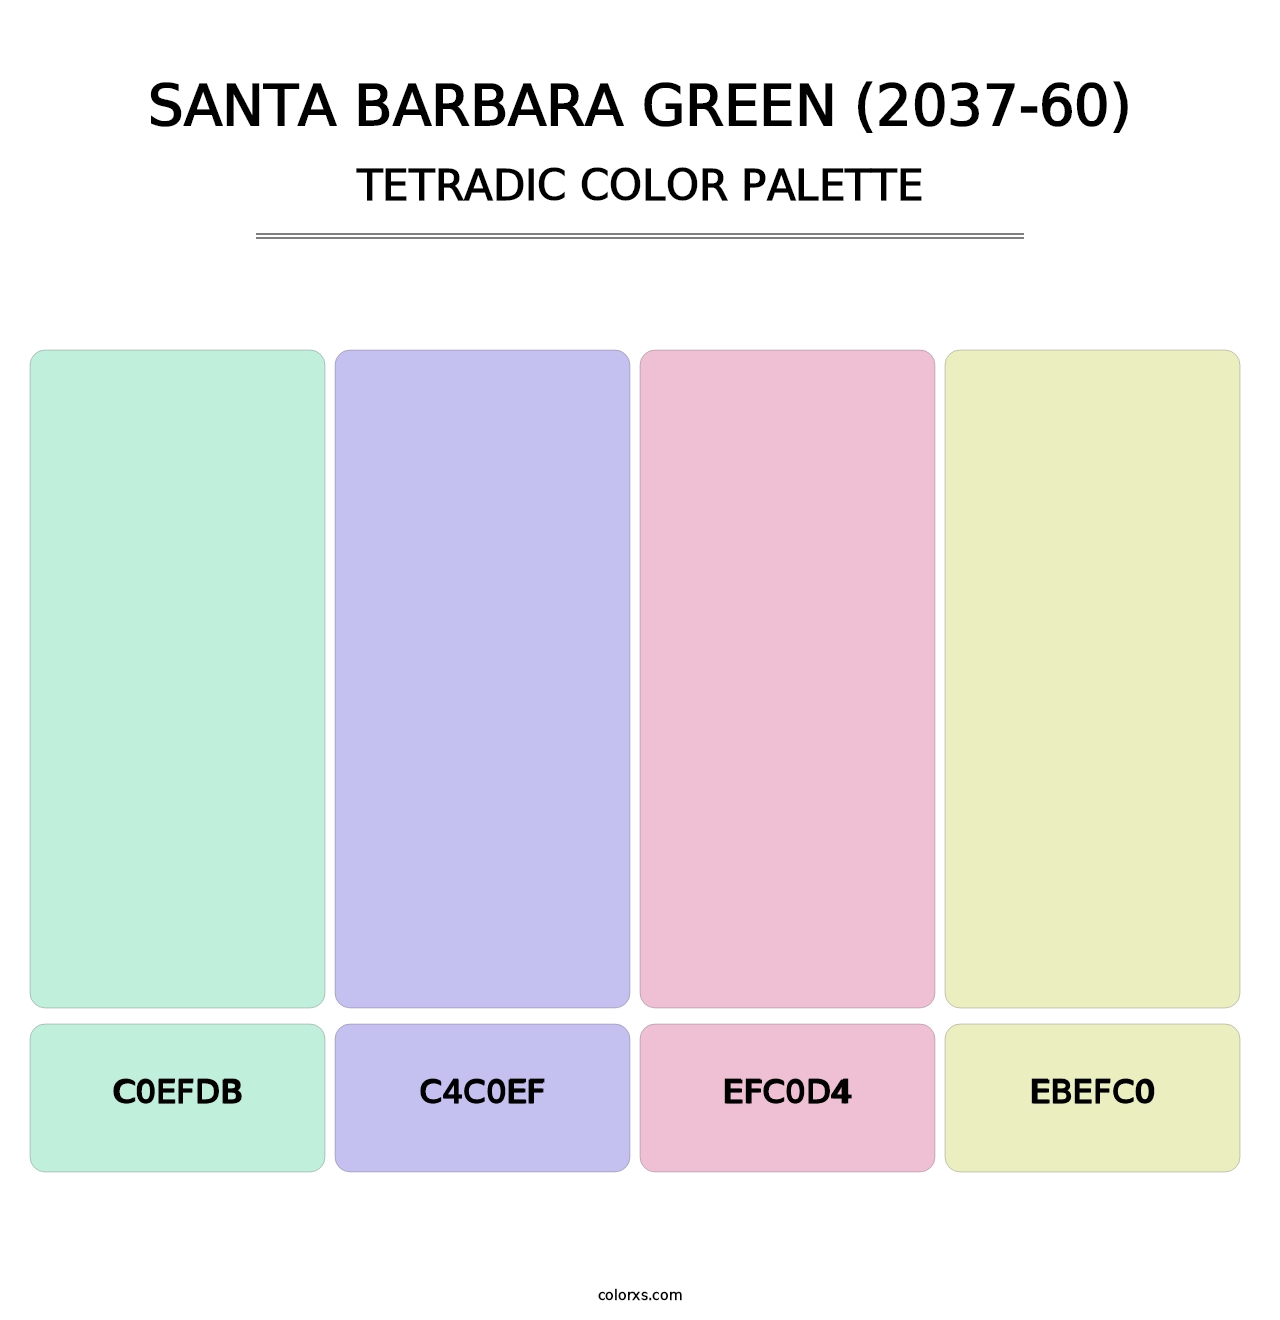 Santa Barbara Green (2037-60) - Tetradic Color Palette